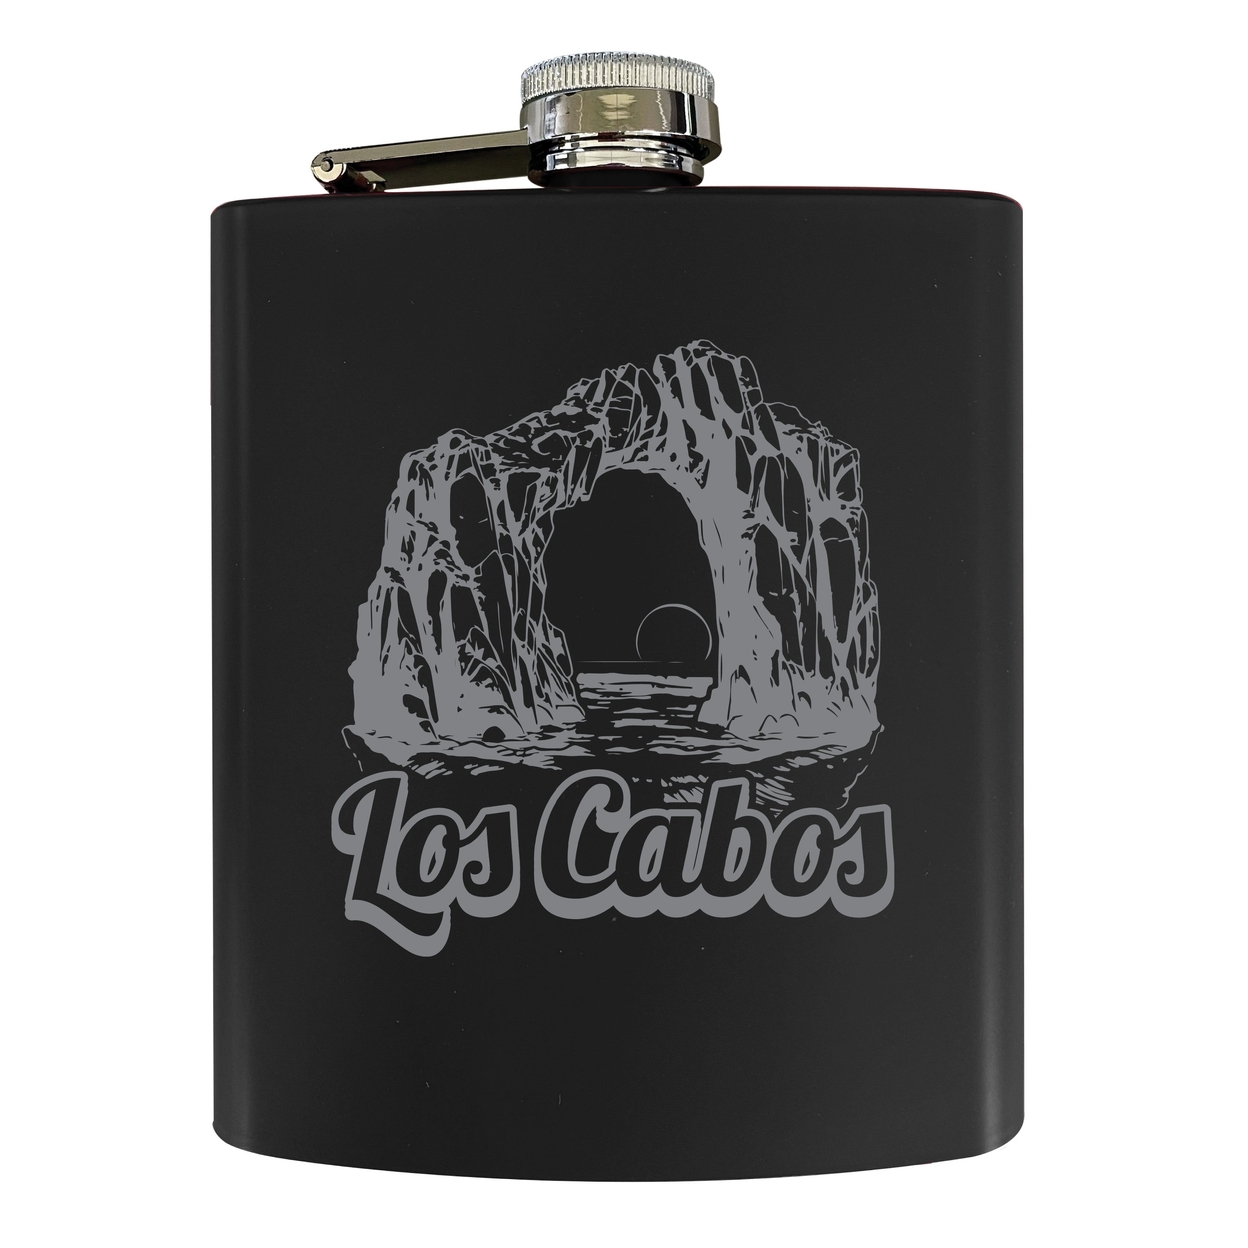 Los Cabos Mexico Souvenir 7 Oz Engraved Steel Flask Matte Finish - Seafoam,,4-Pack